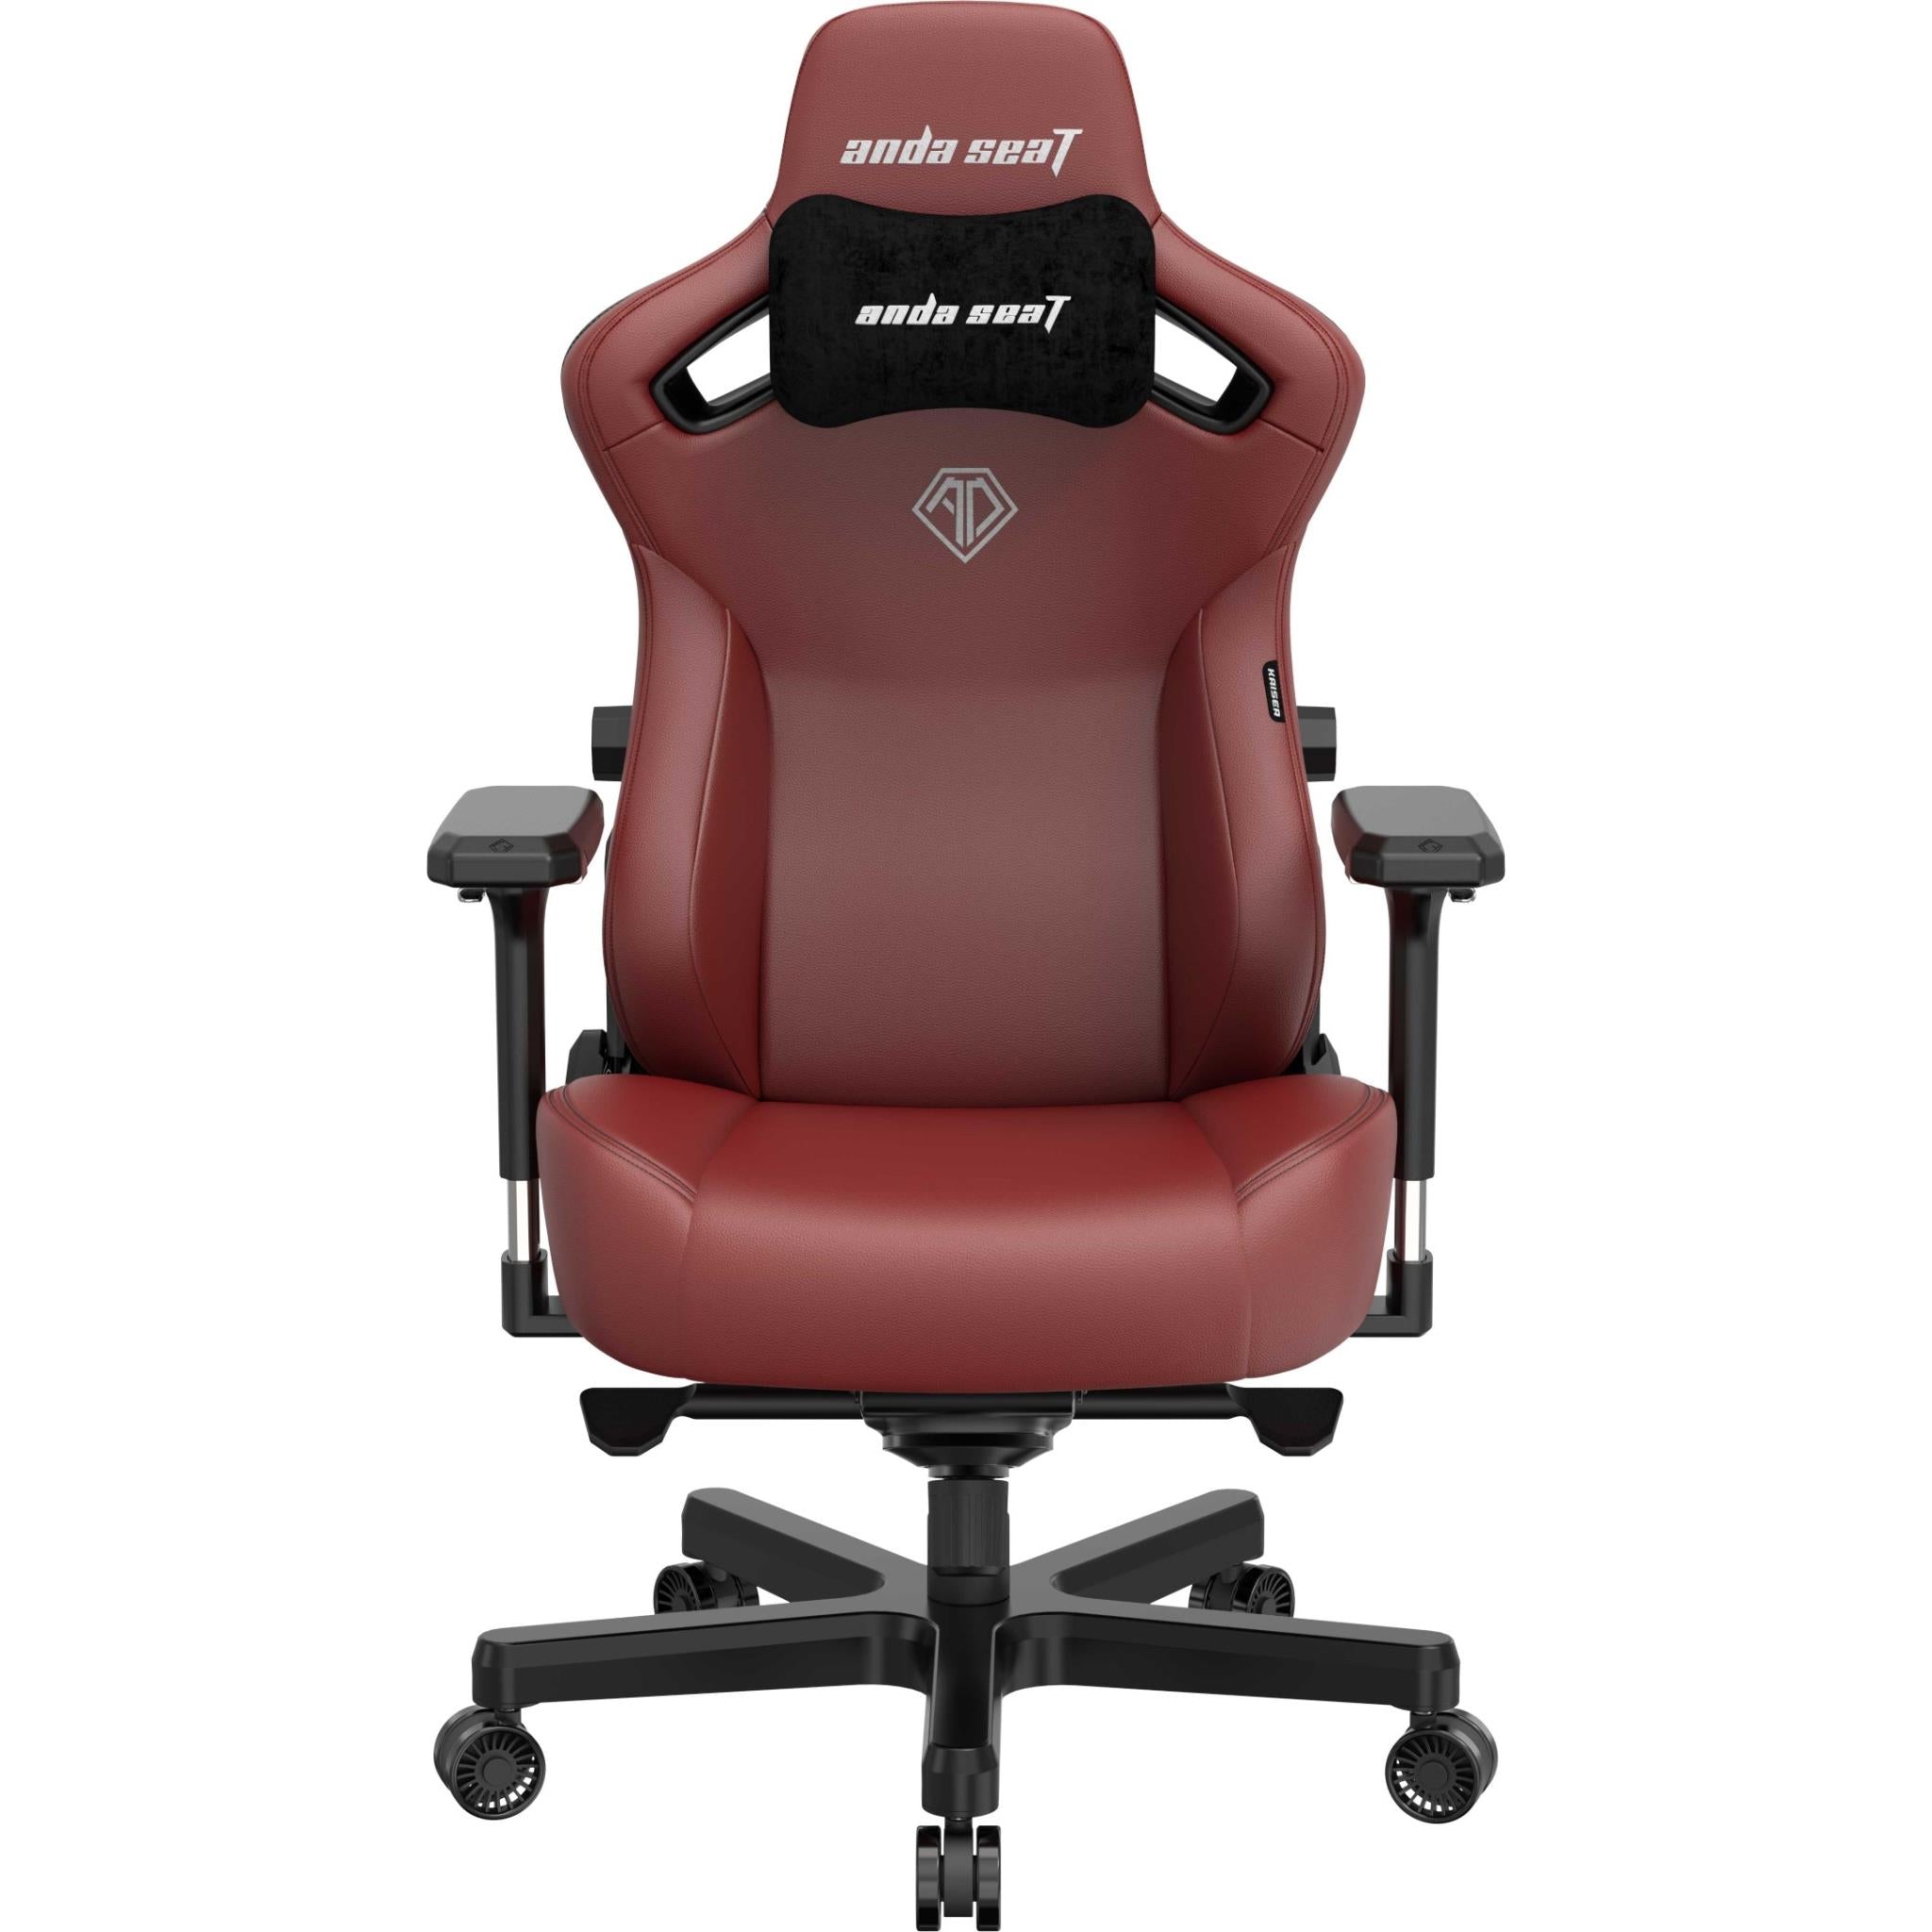 anda seat kaiser 3 series premium gaming chair maroon (xl)